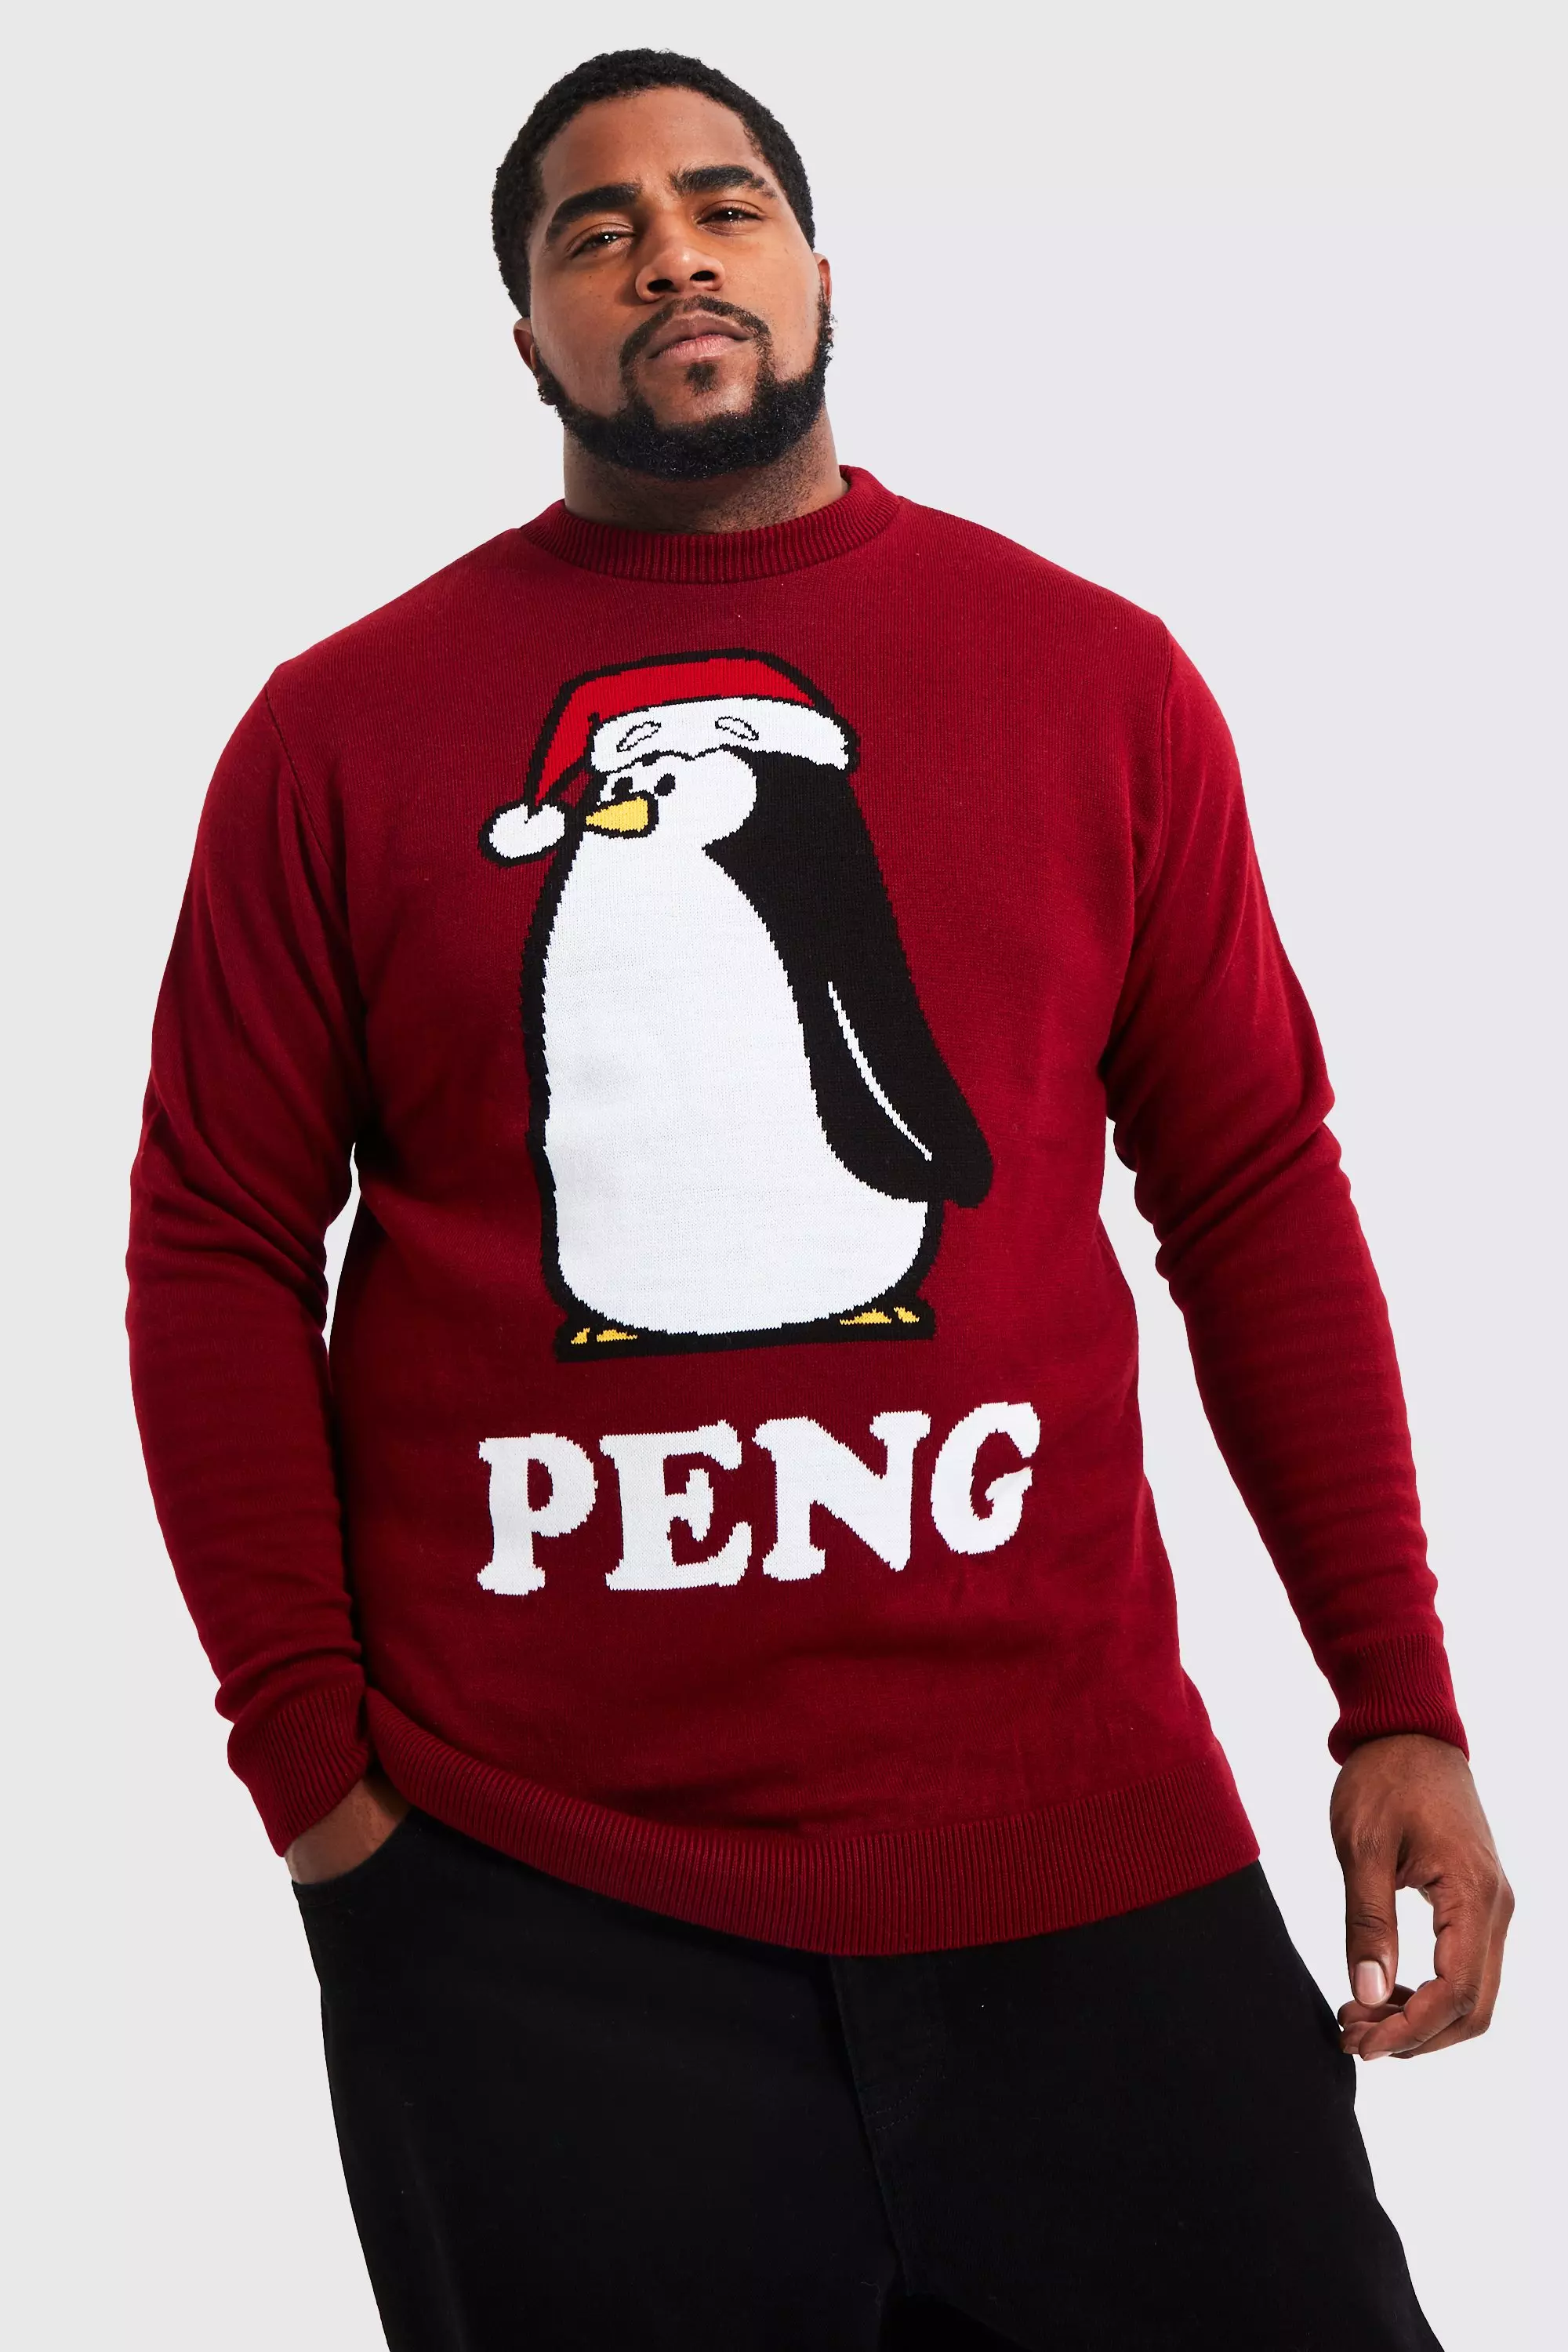 Plus Peng Novelty Christmas Sweater Wine